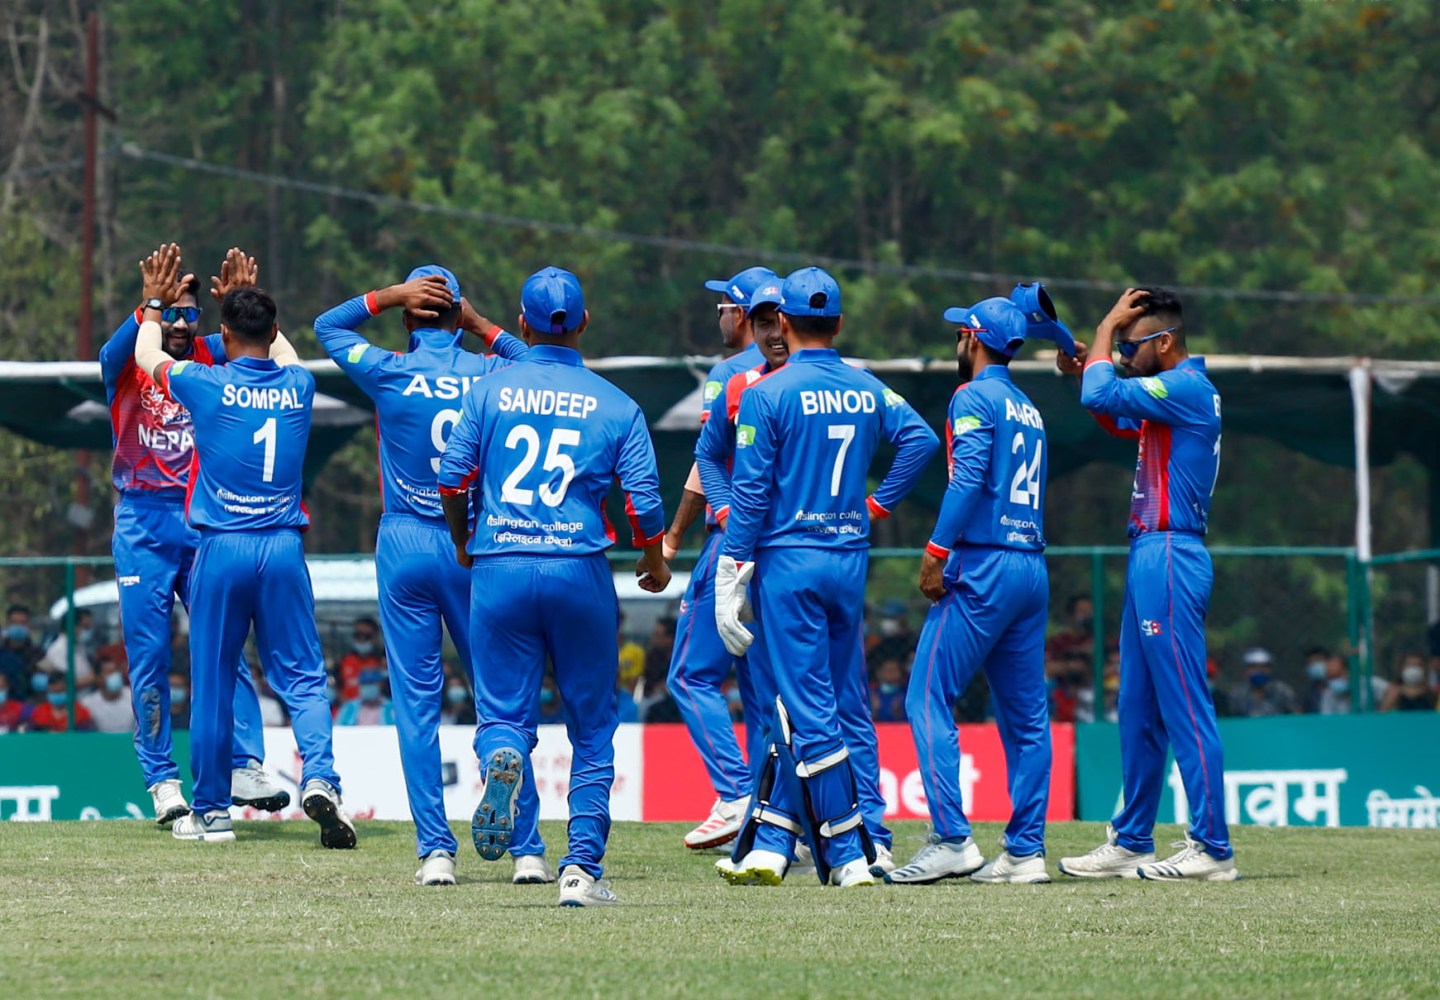 World Cricket League 2: Nepal thrashes Oman by 7 wickets